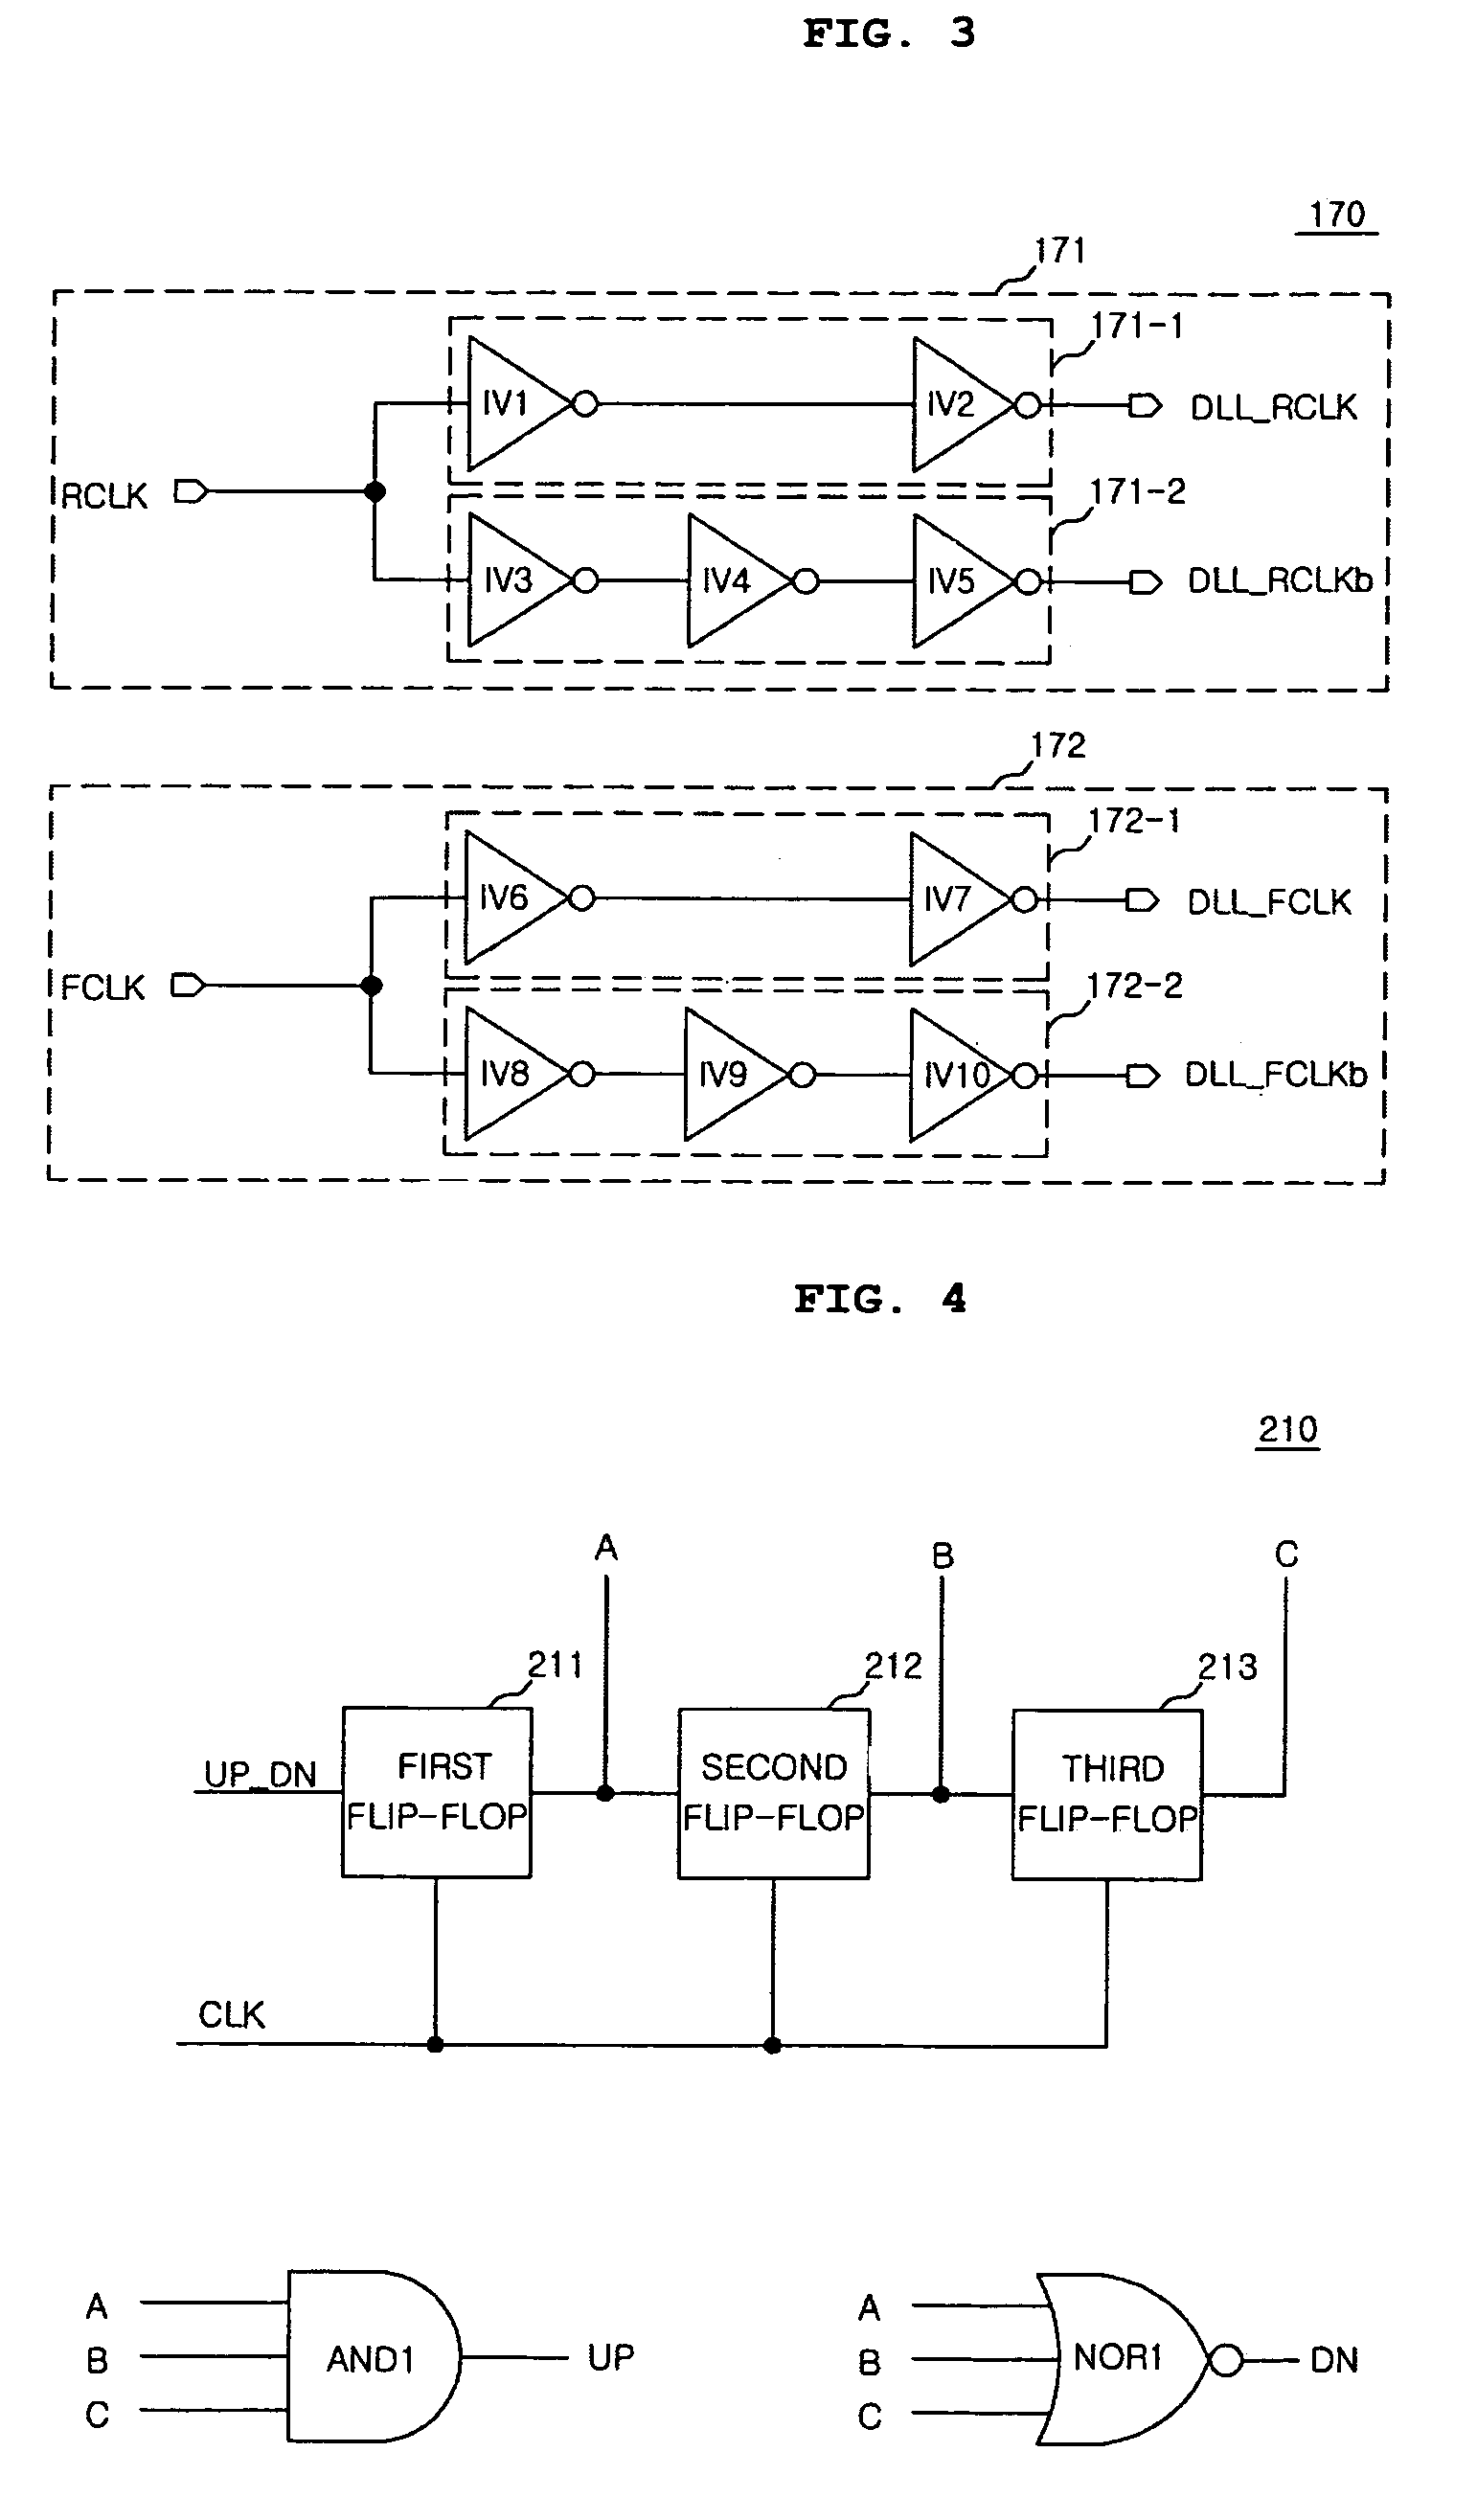 Clock generator for semiconductor memory apparatus